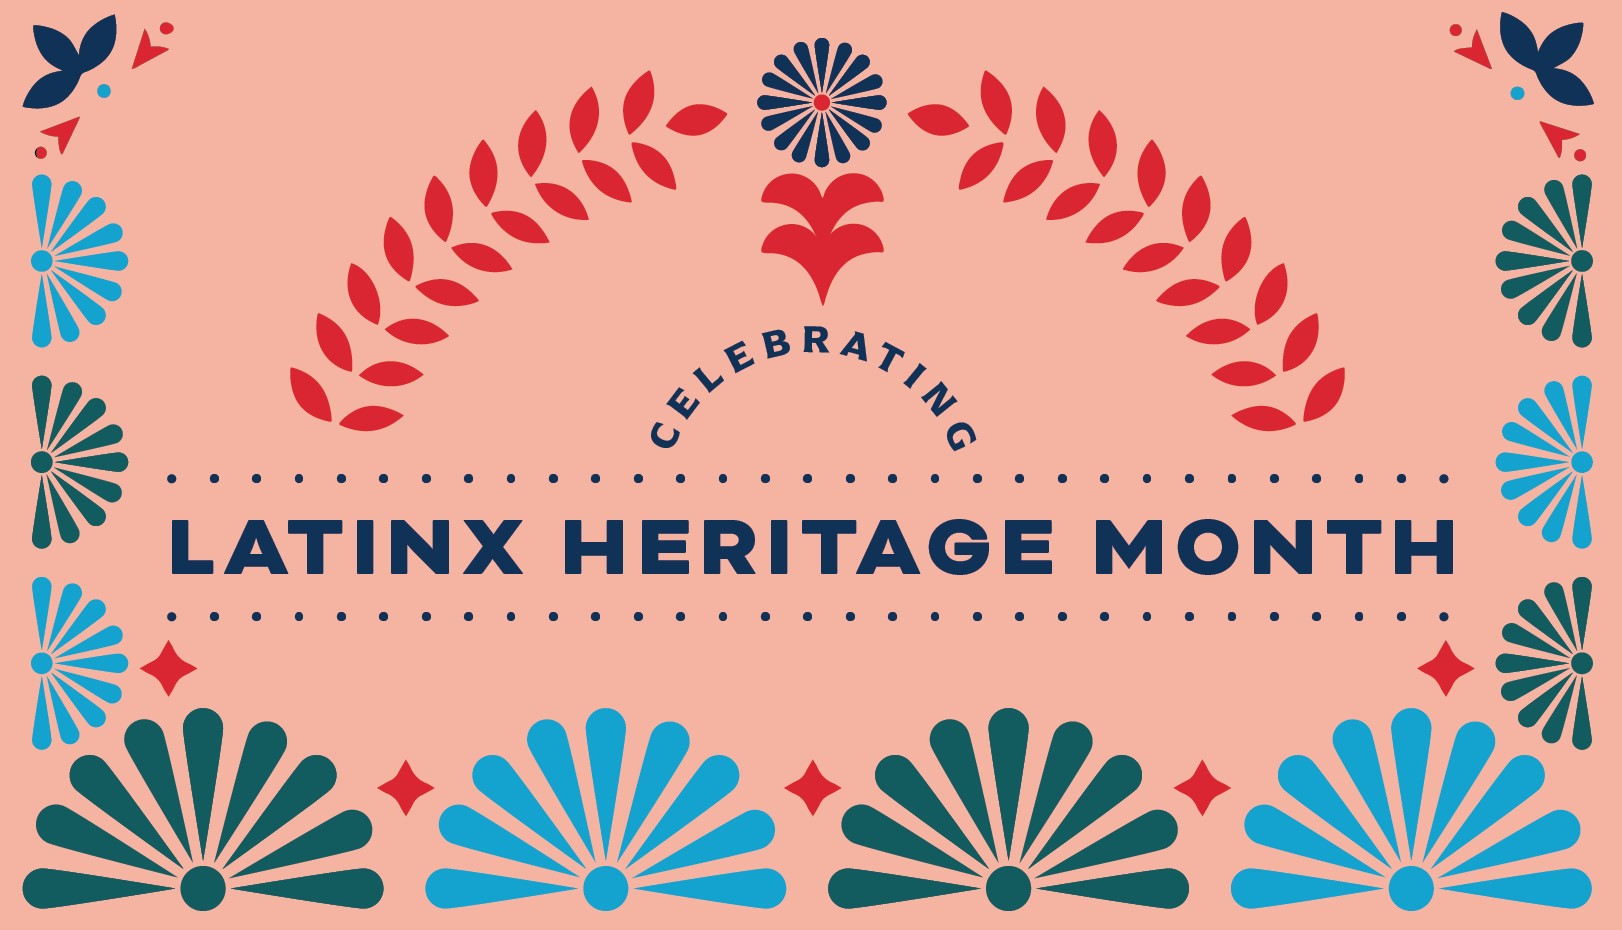 Latinx Heritage Month banner